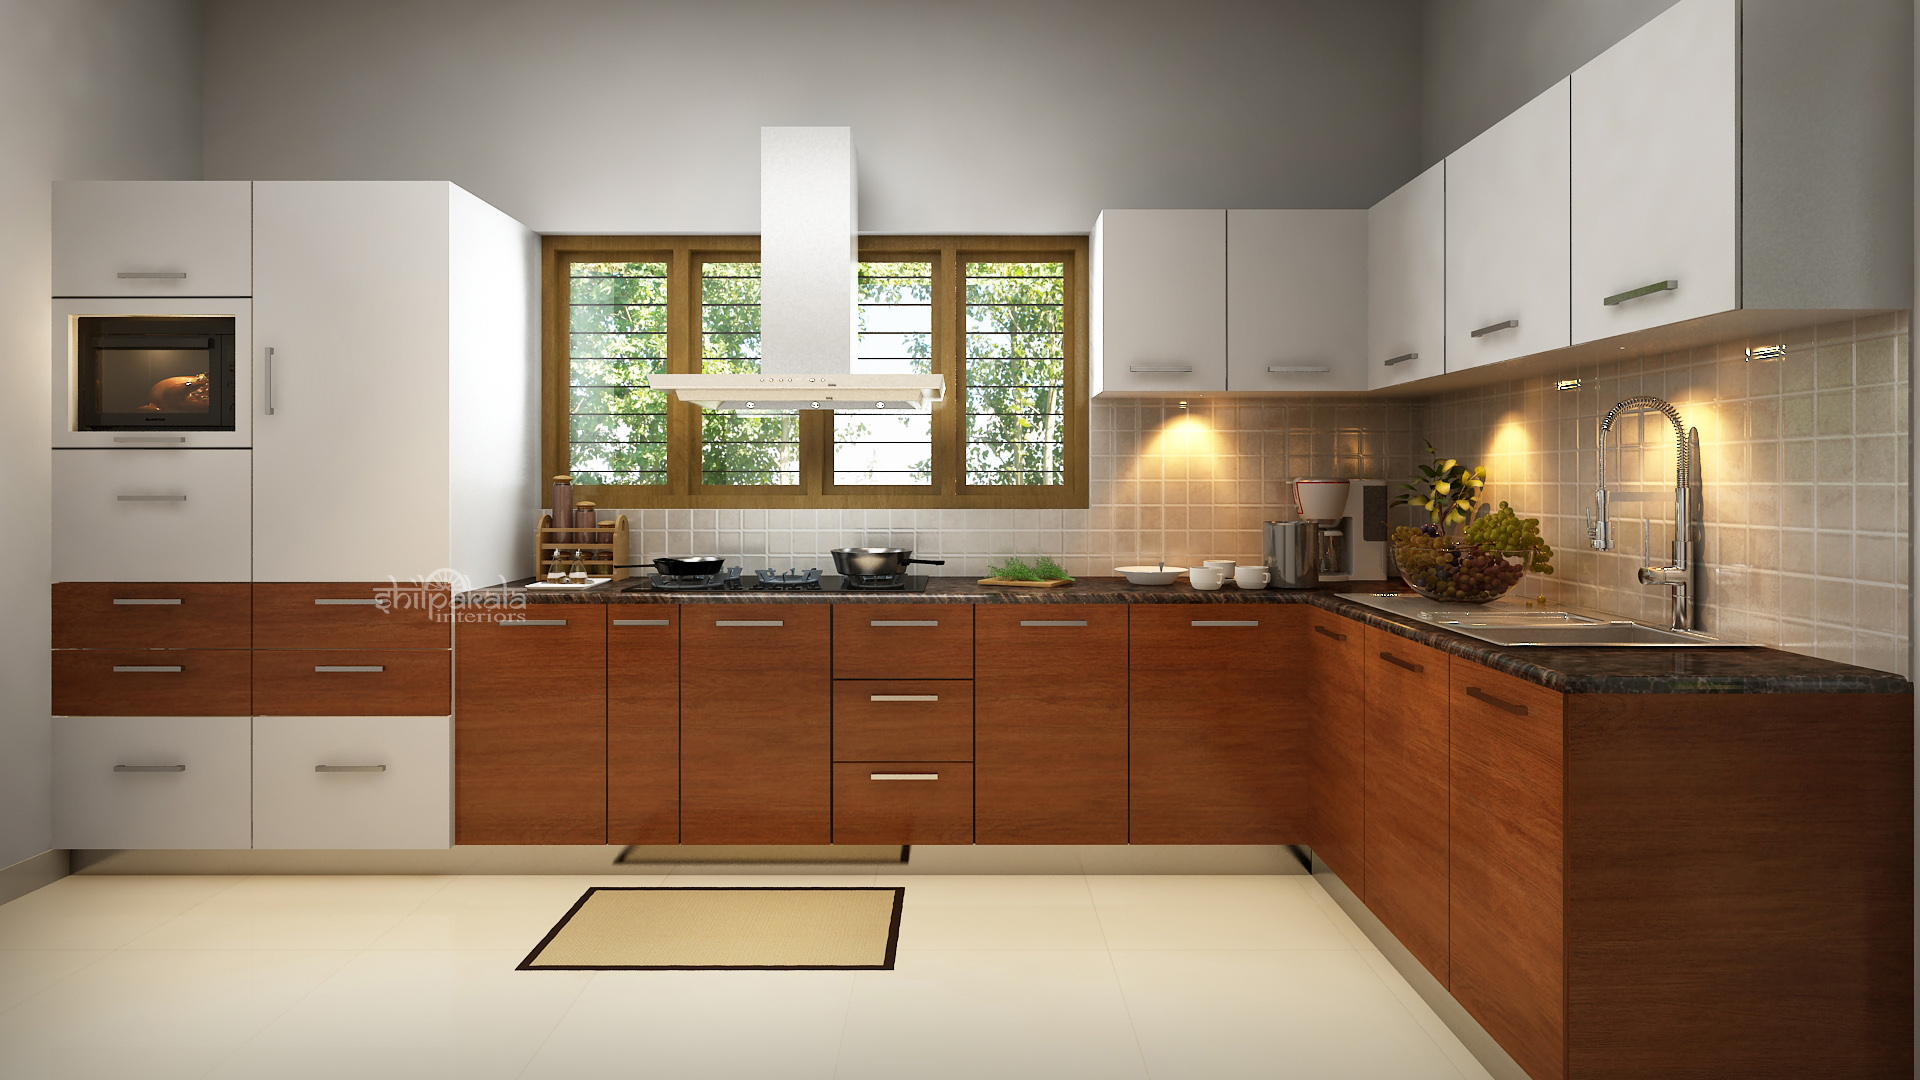 Minimalist Home Interior Design Ideas For Kitchen for Simple Design